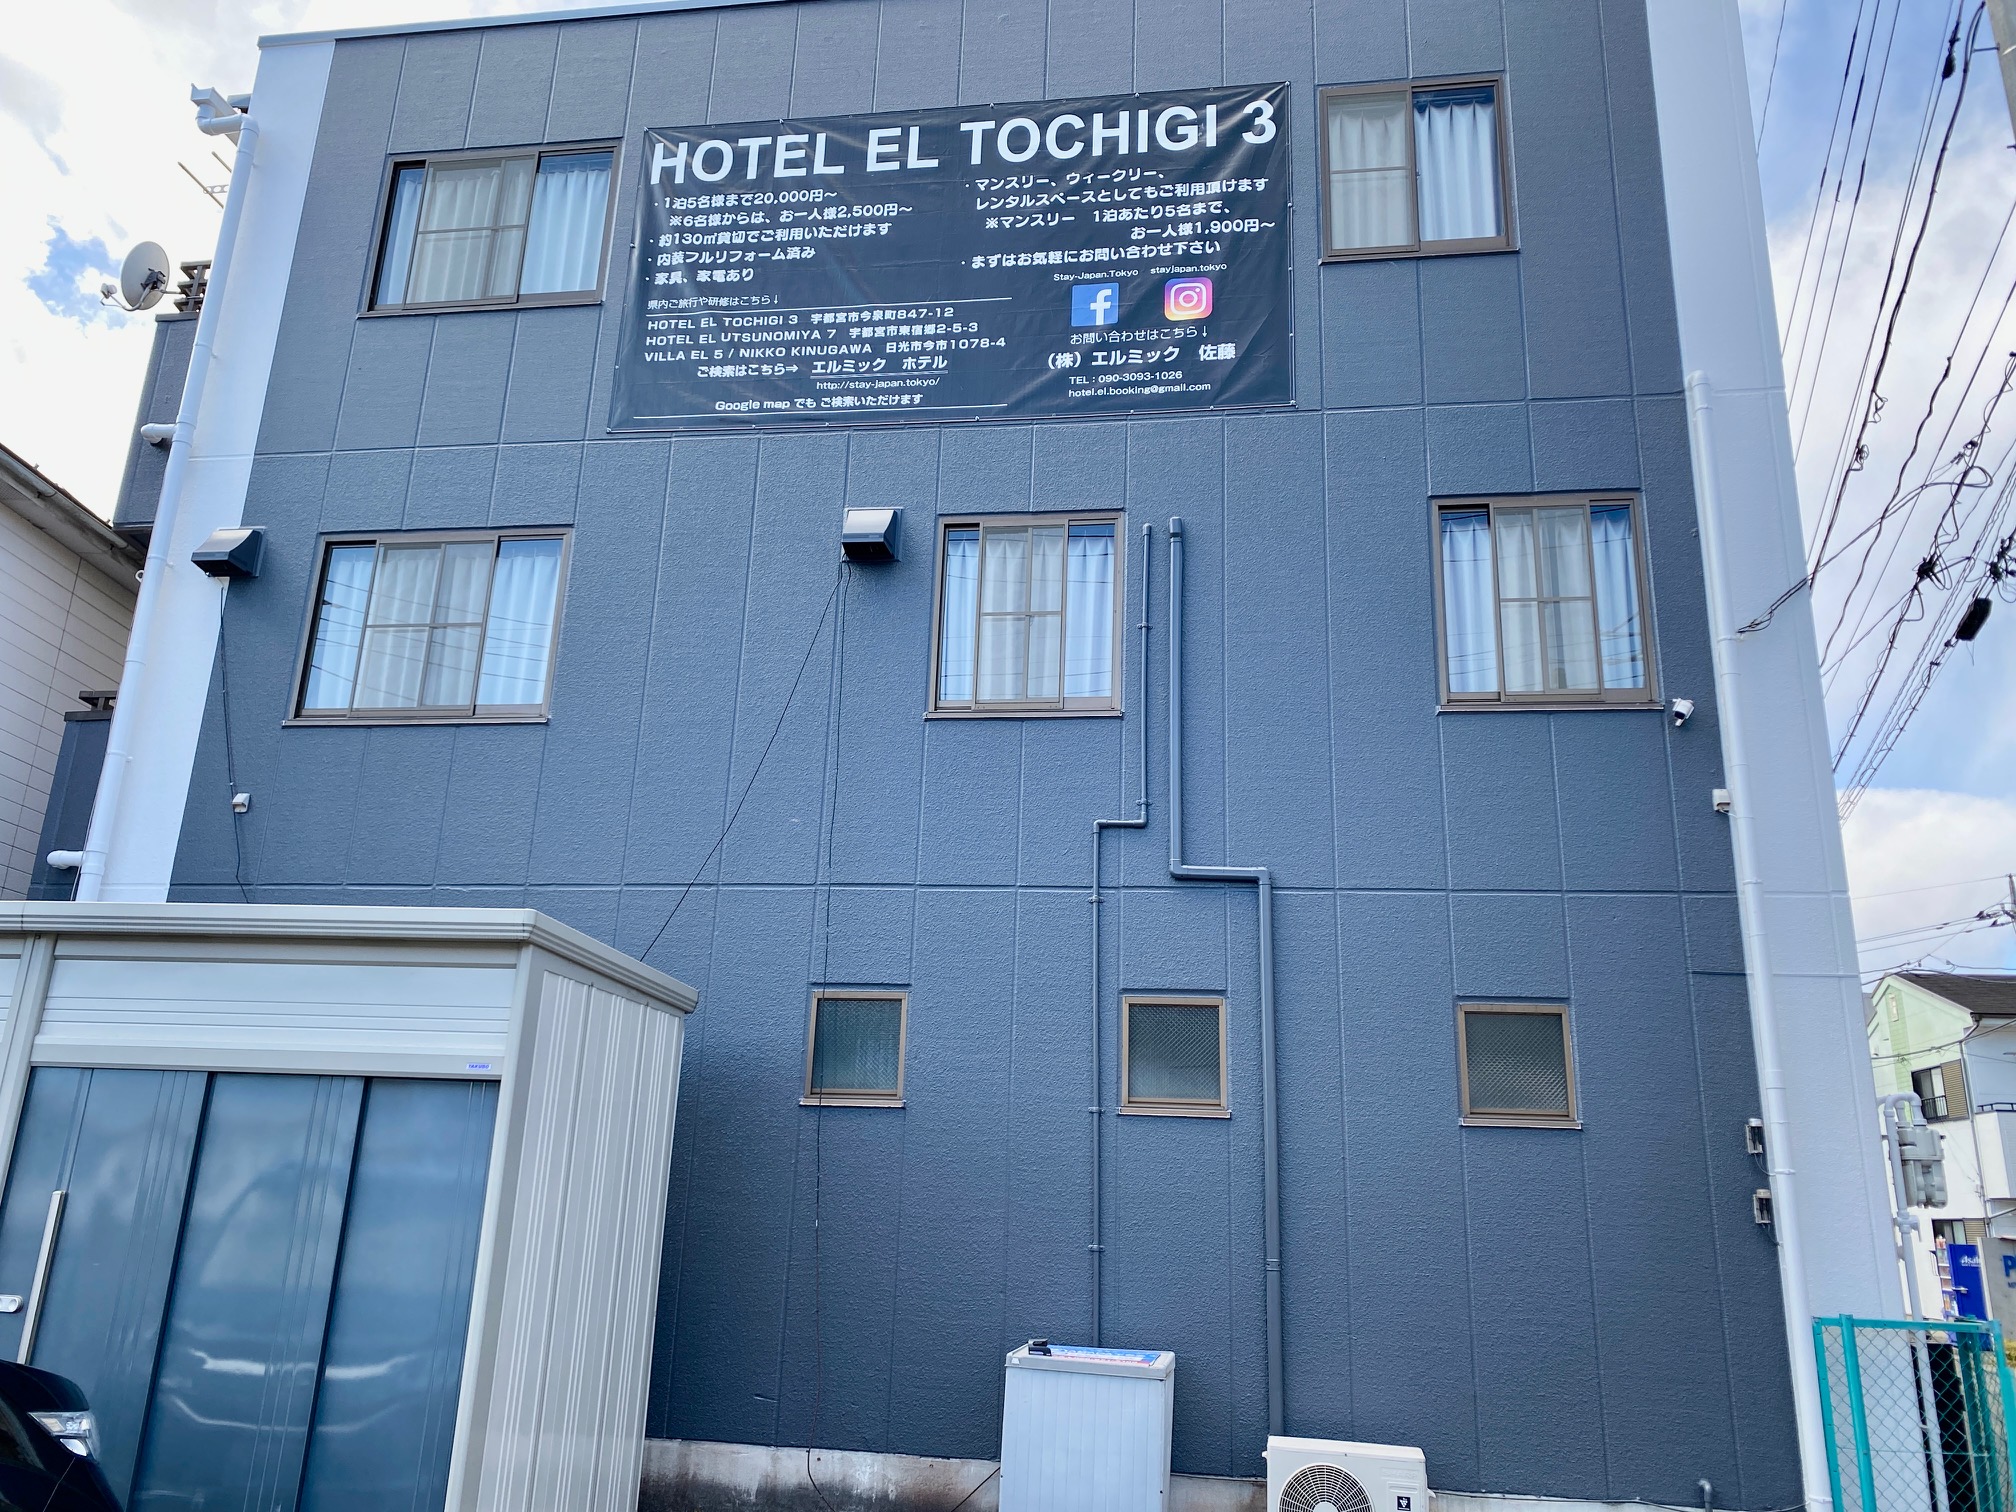 Hotel El Tochigi 3